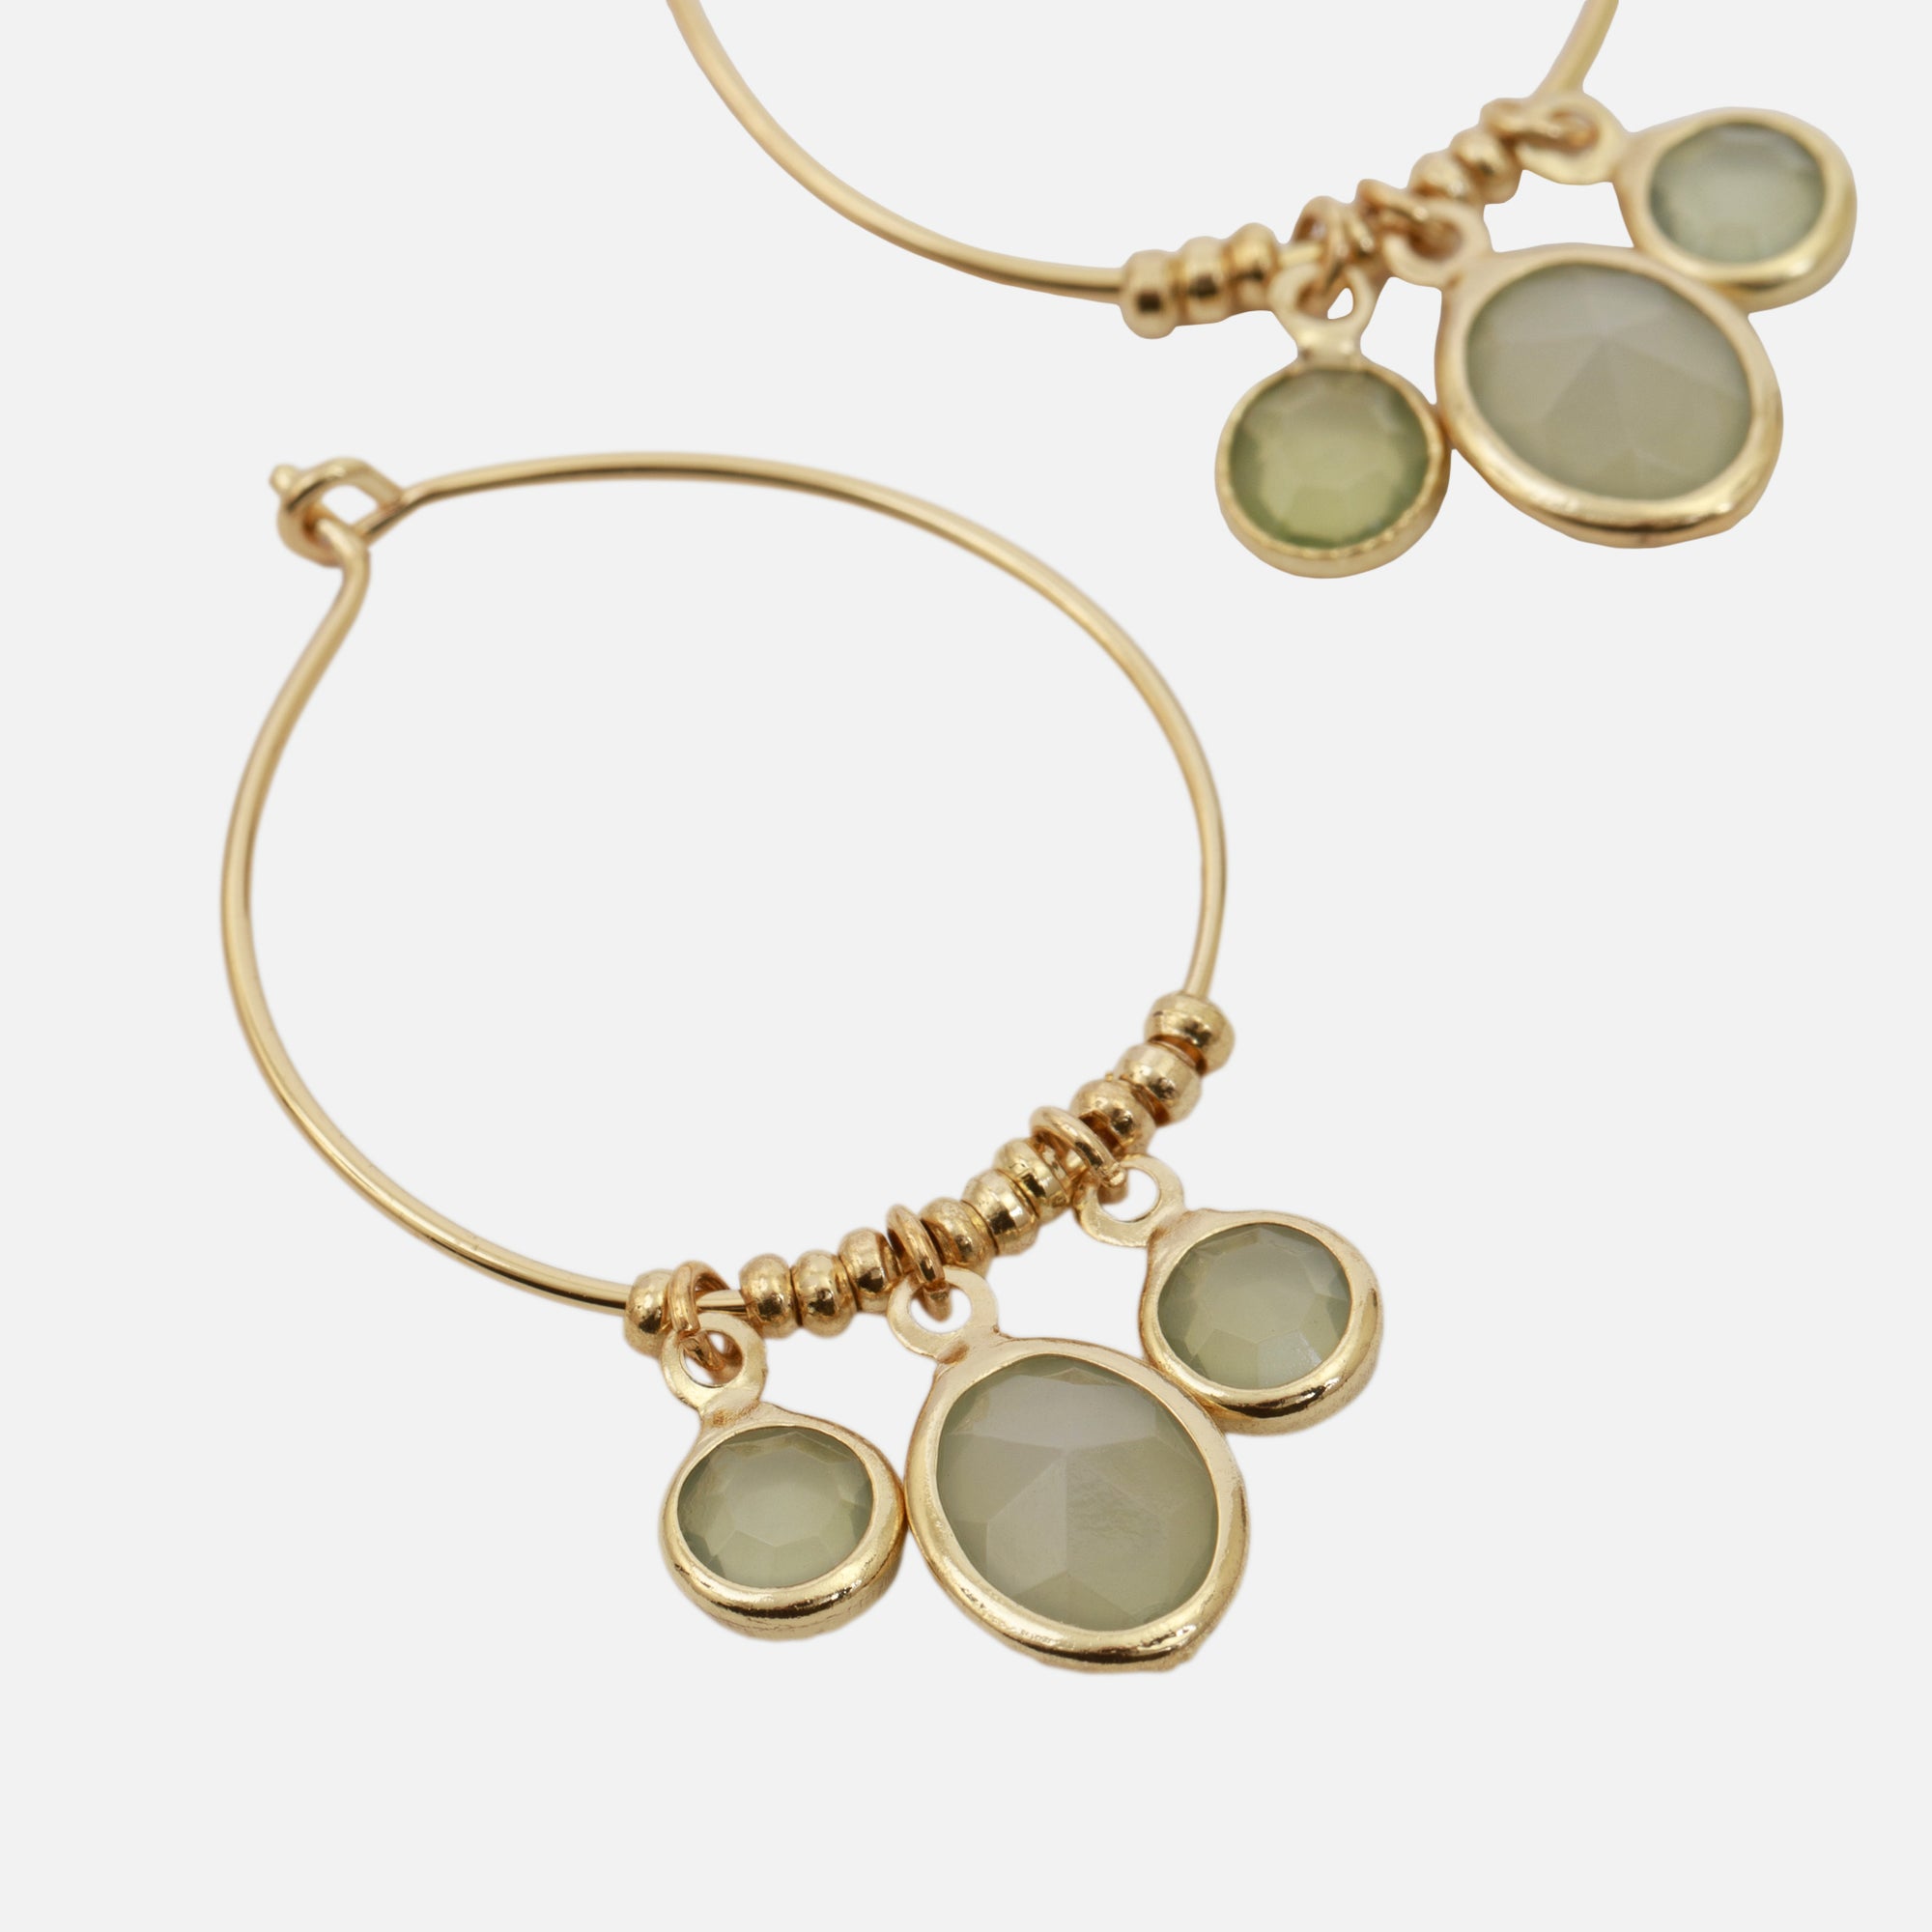 Golden hoop earrings with 3 green stones and golden beads